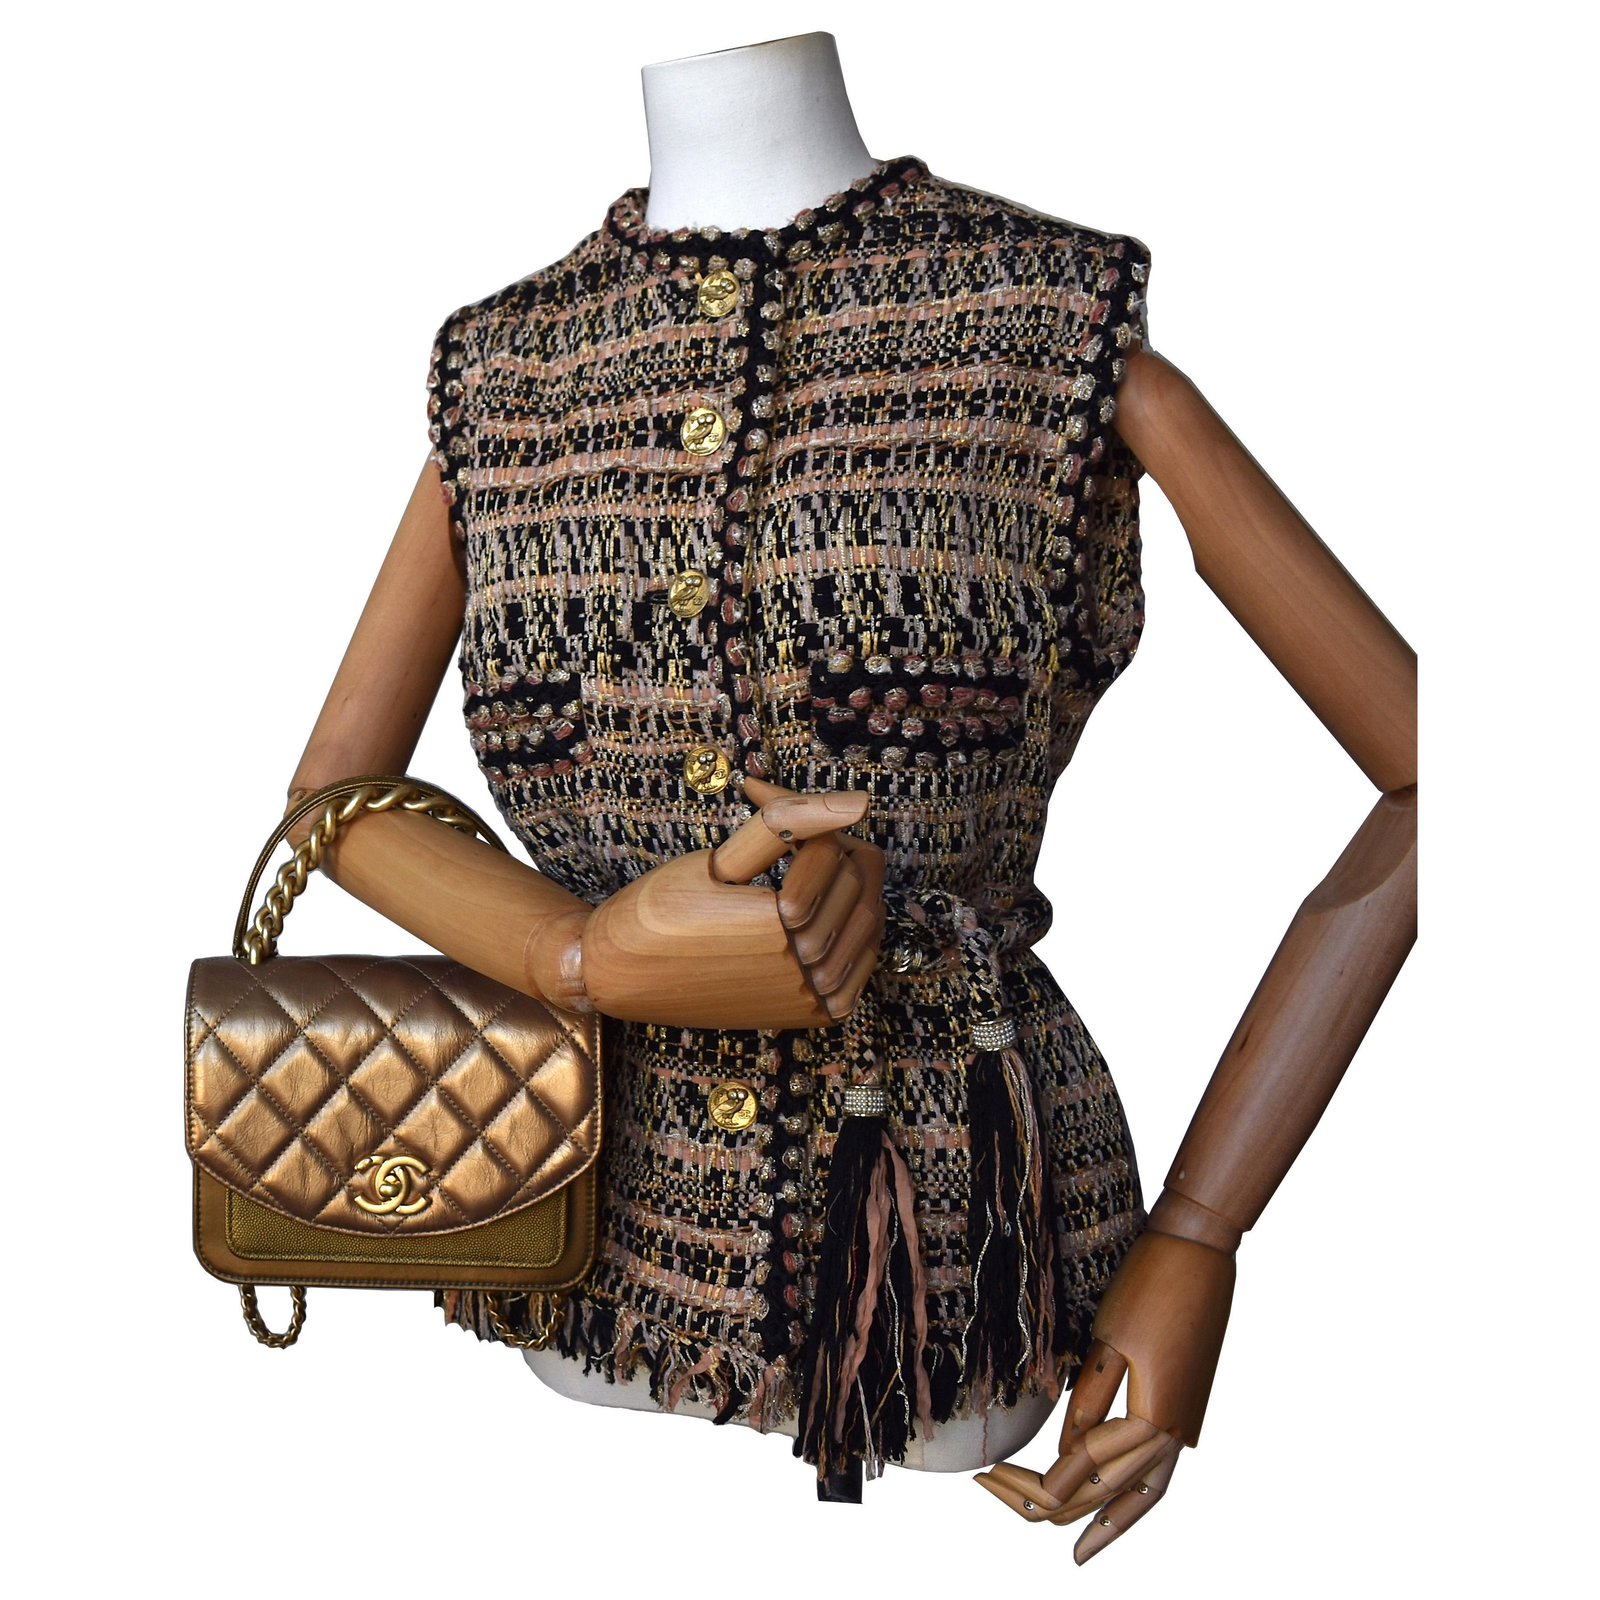 Chanel Sleeveless Mini Dress 'Greece' with Owl Embellishment - Chanel